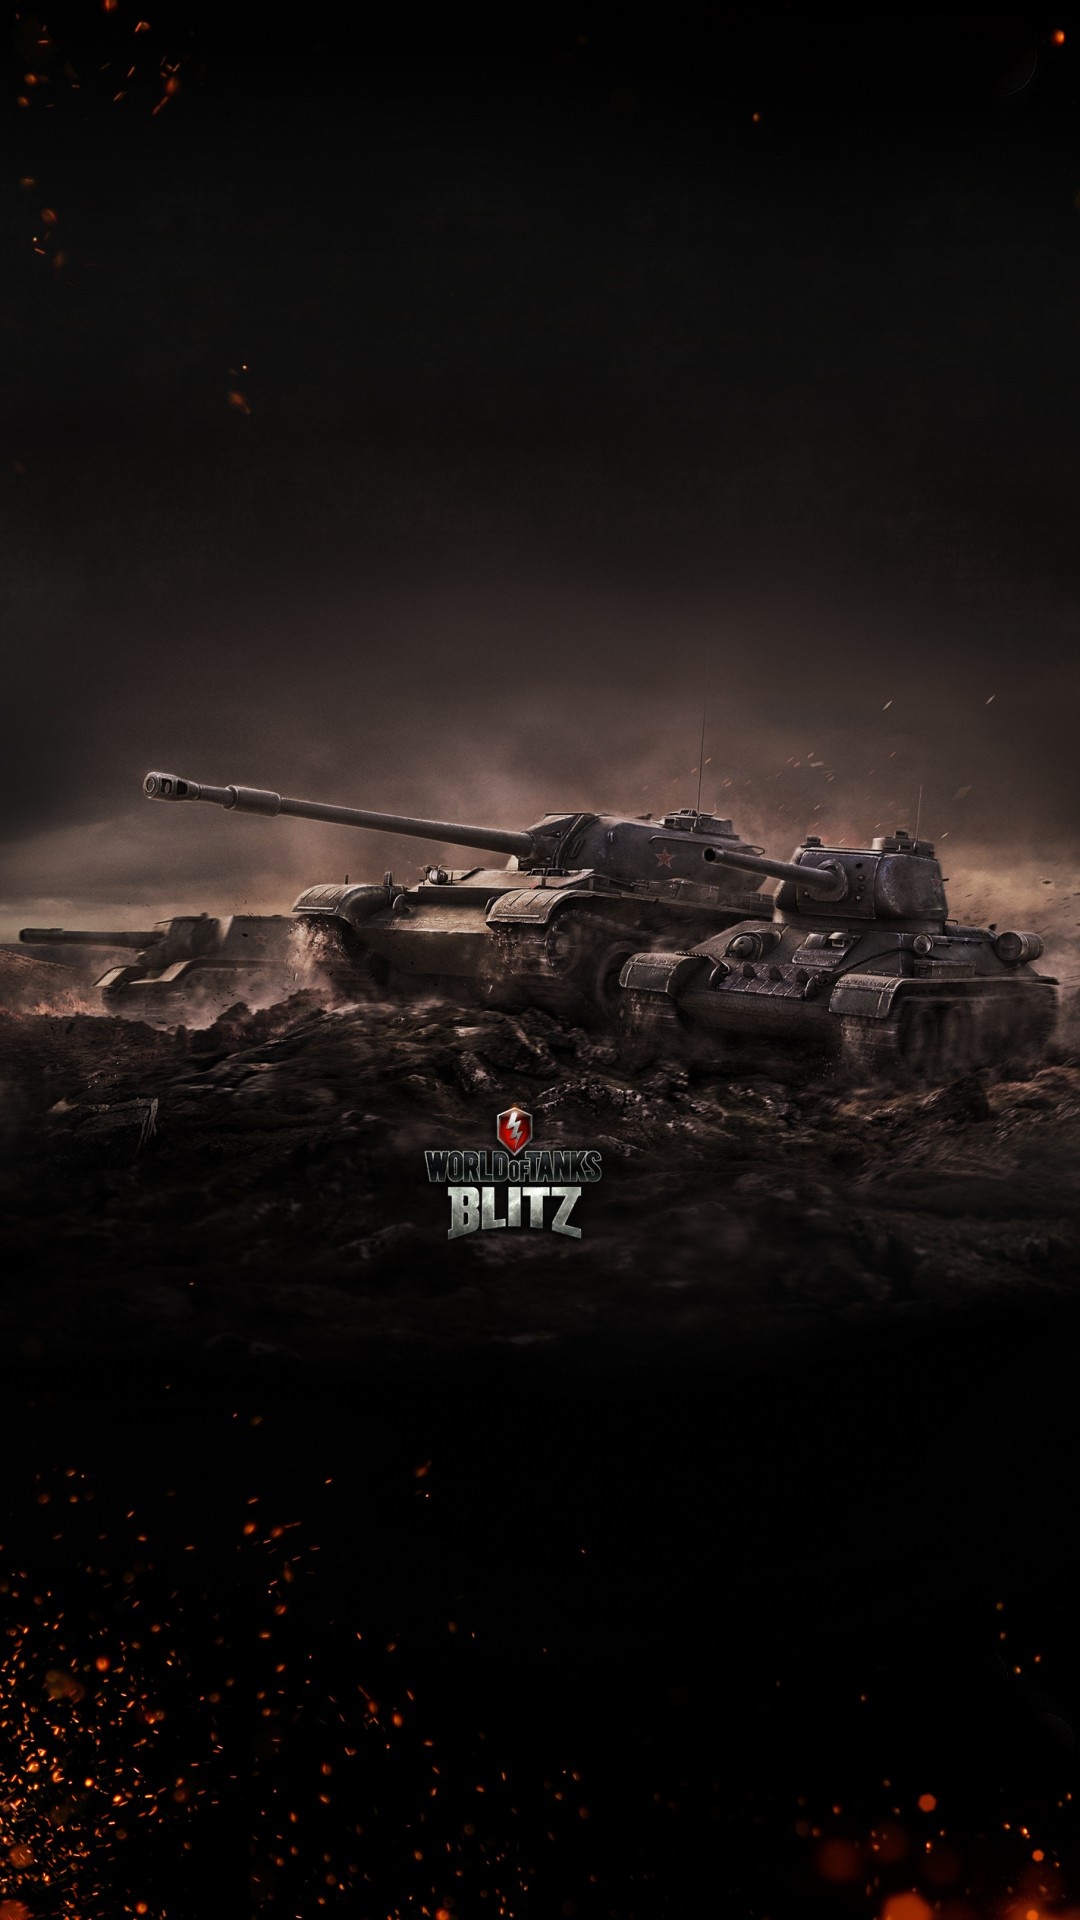 world of tanks blitz wallpaper hd